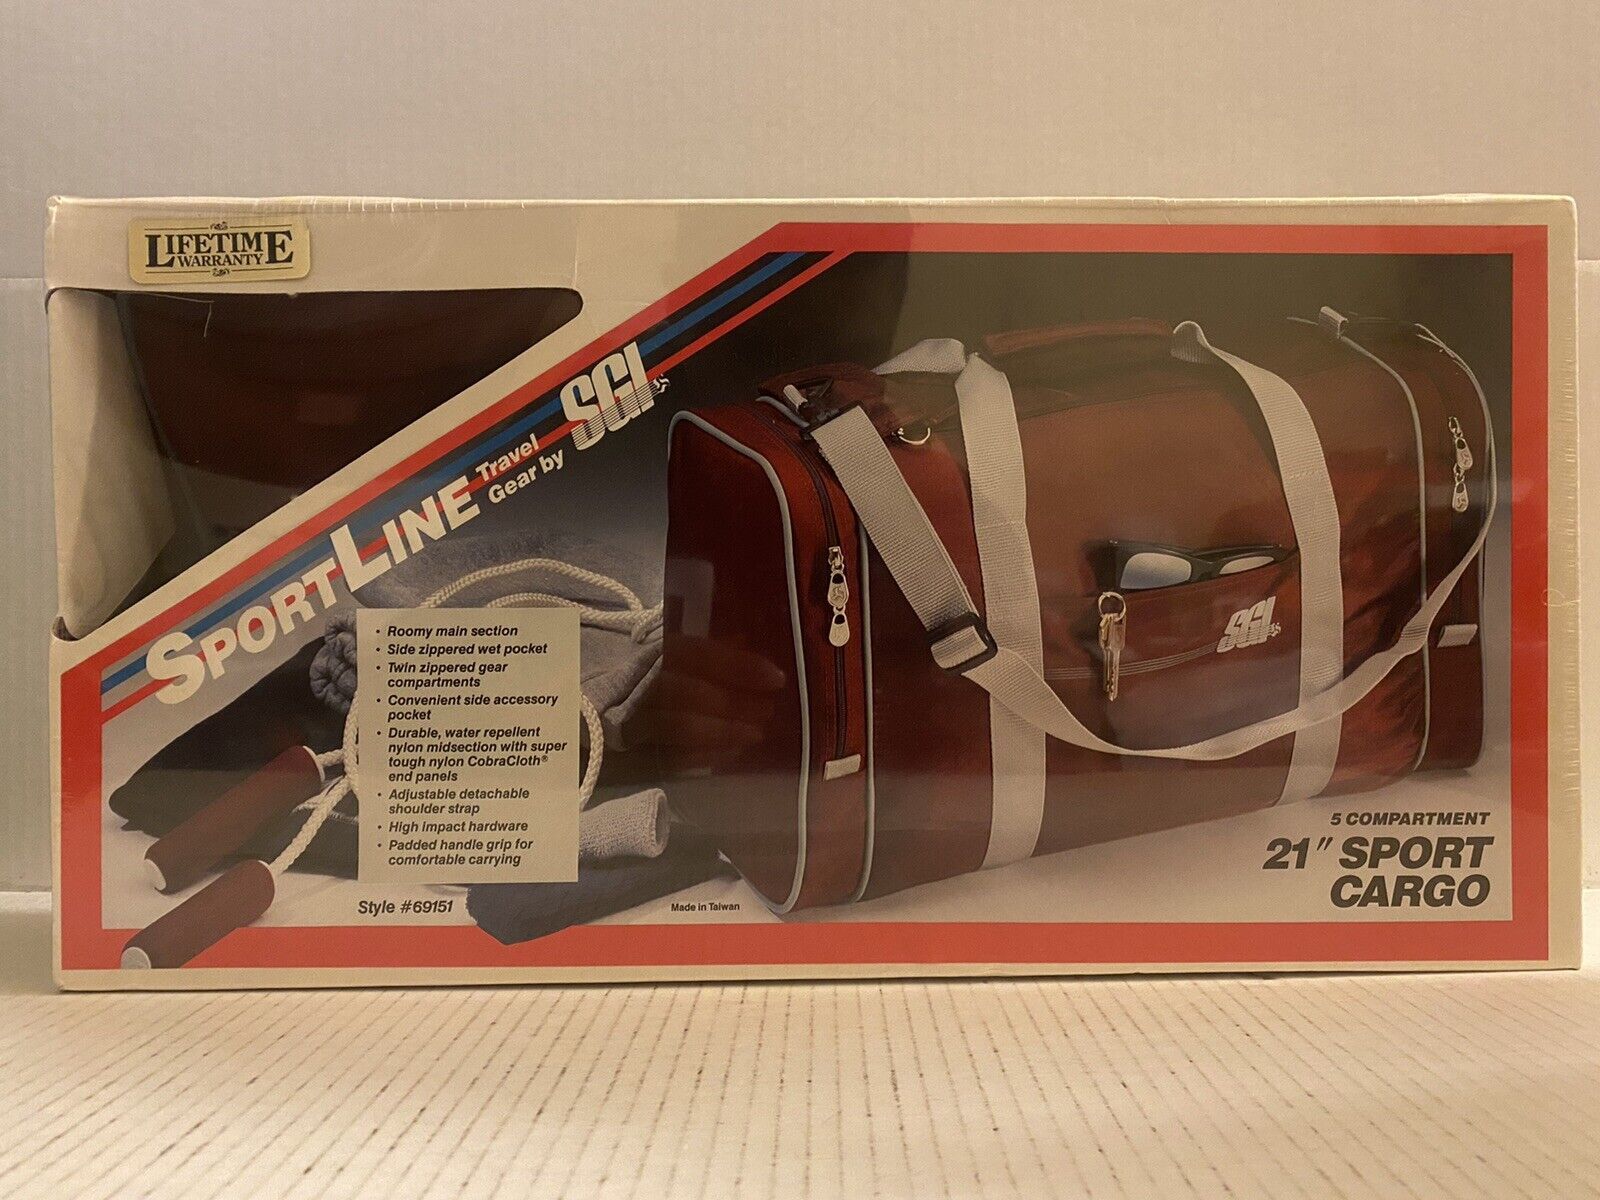 SportLine Travel Gear by SGI Style #69151, 5 Compartment 21" SPORT CARGO bag - $128.69